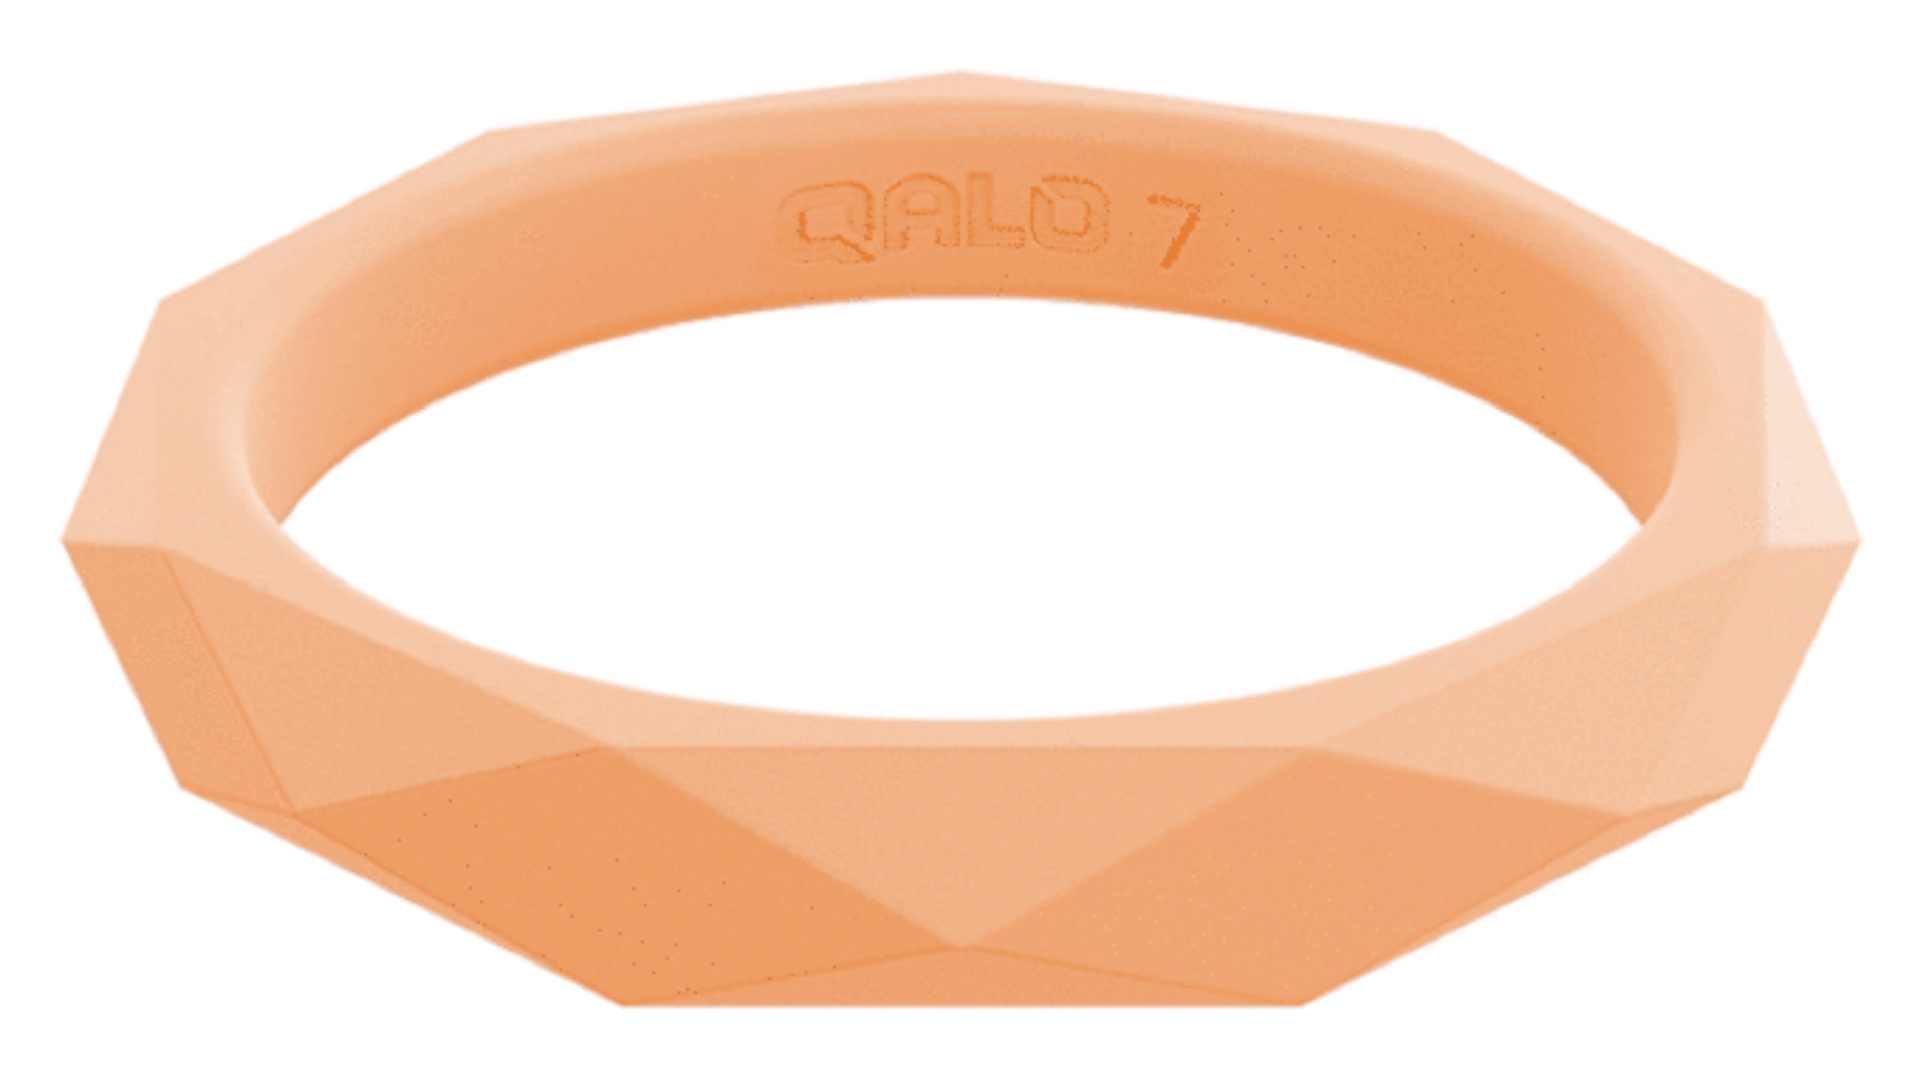 Qalo rubber women's wedding ring